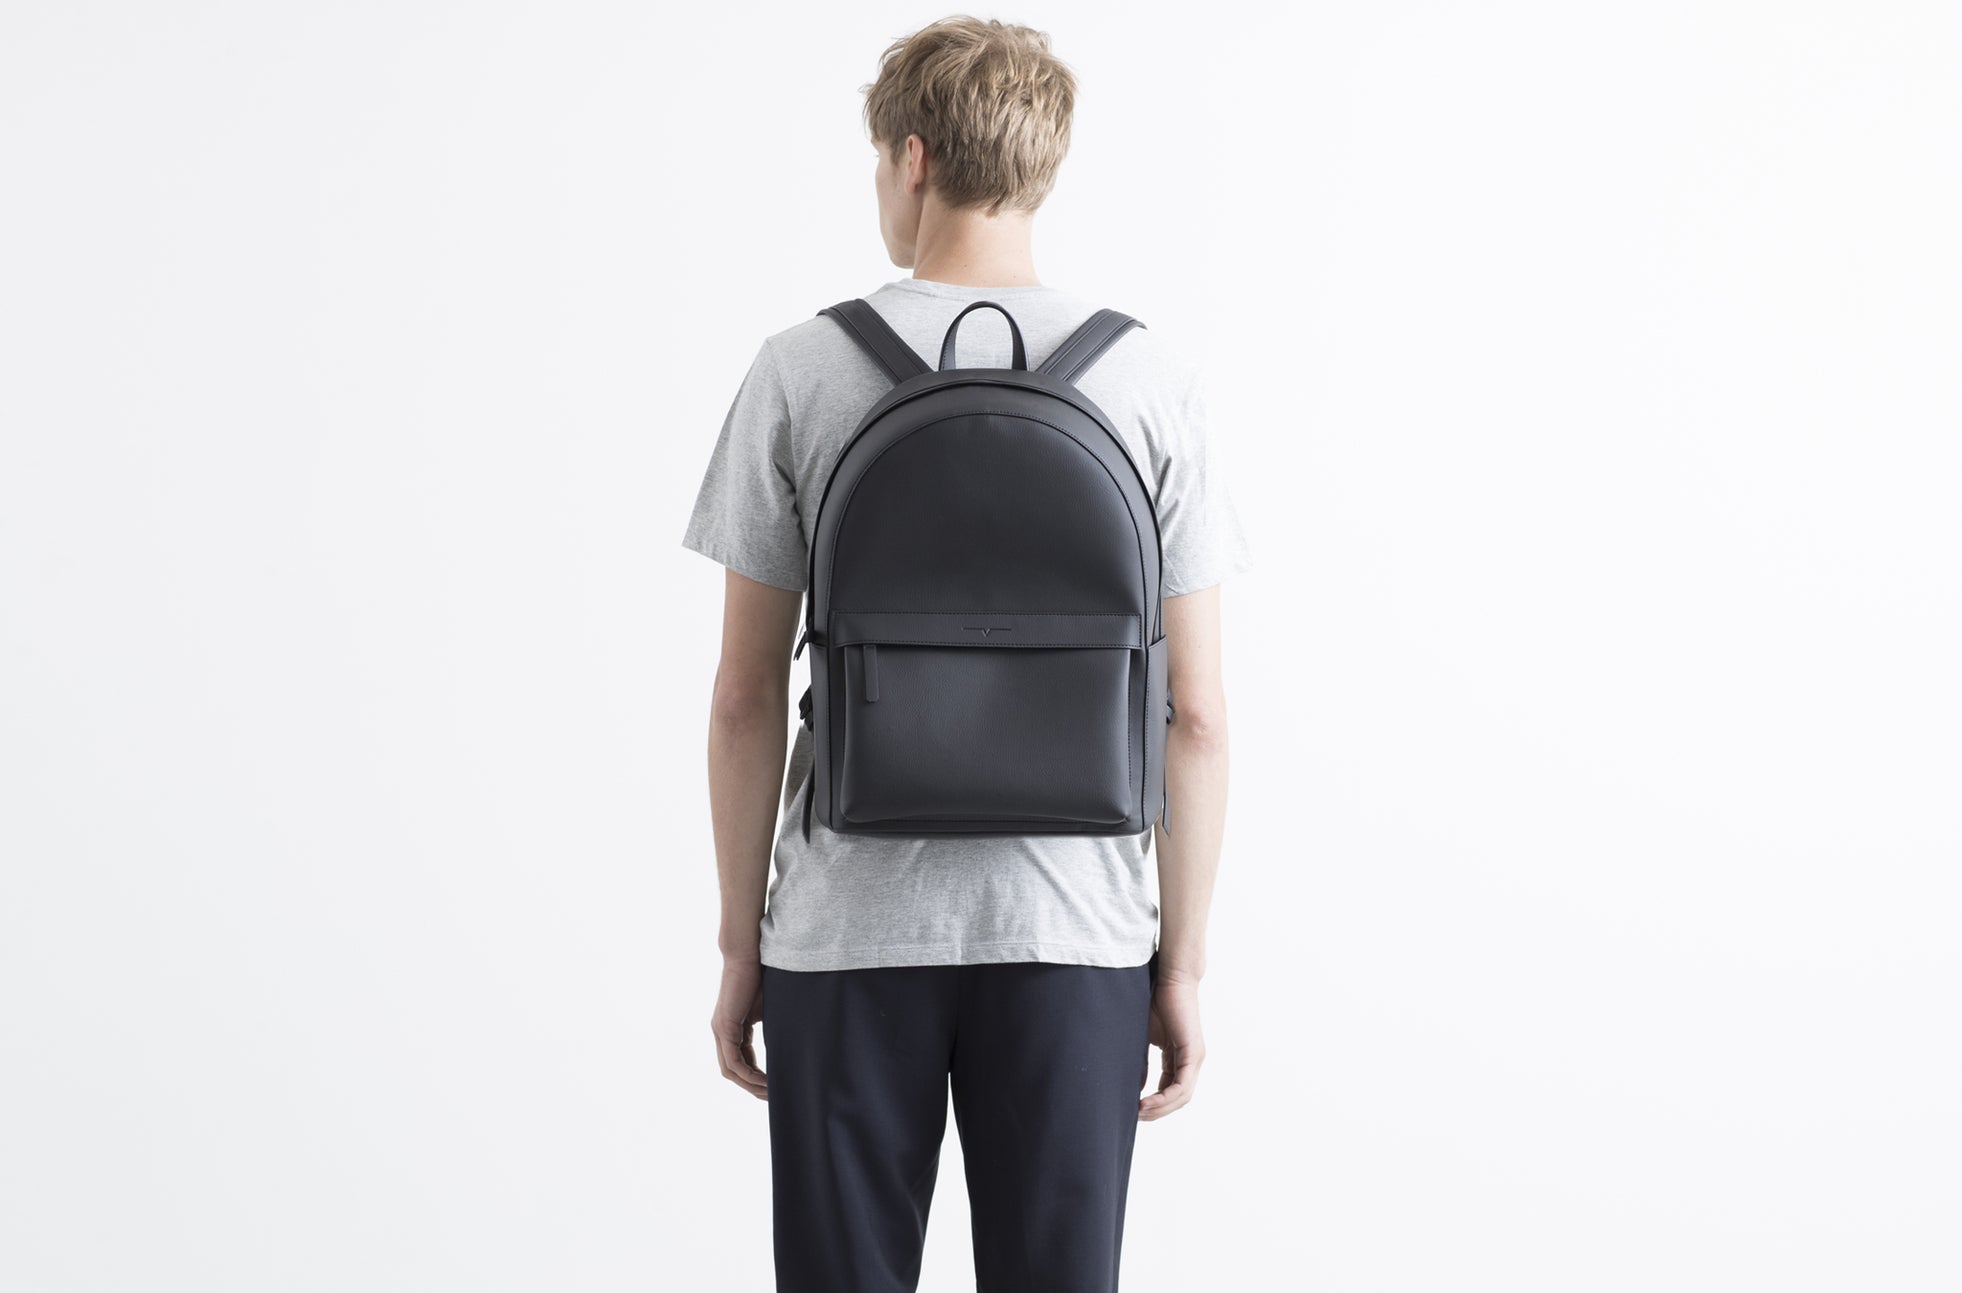 The Classic Backpack in Technik in Black image 